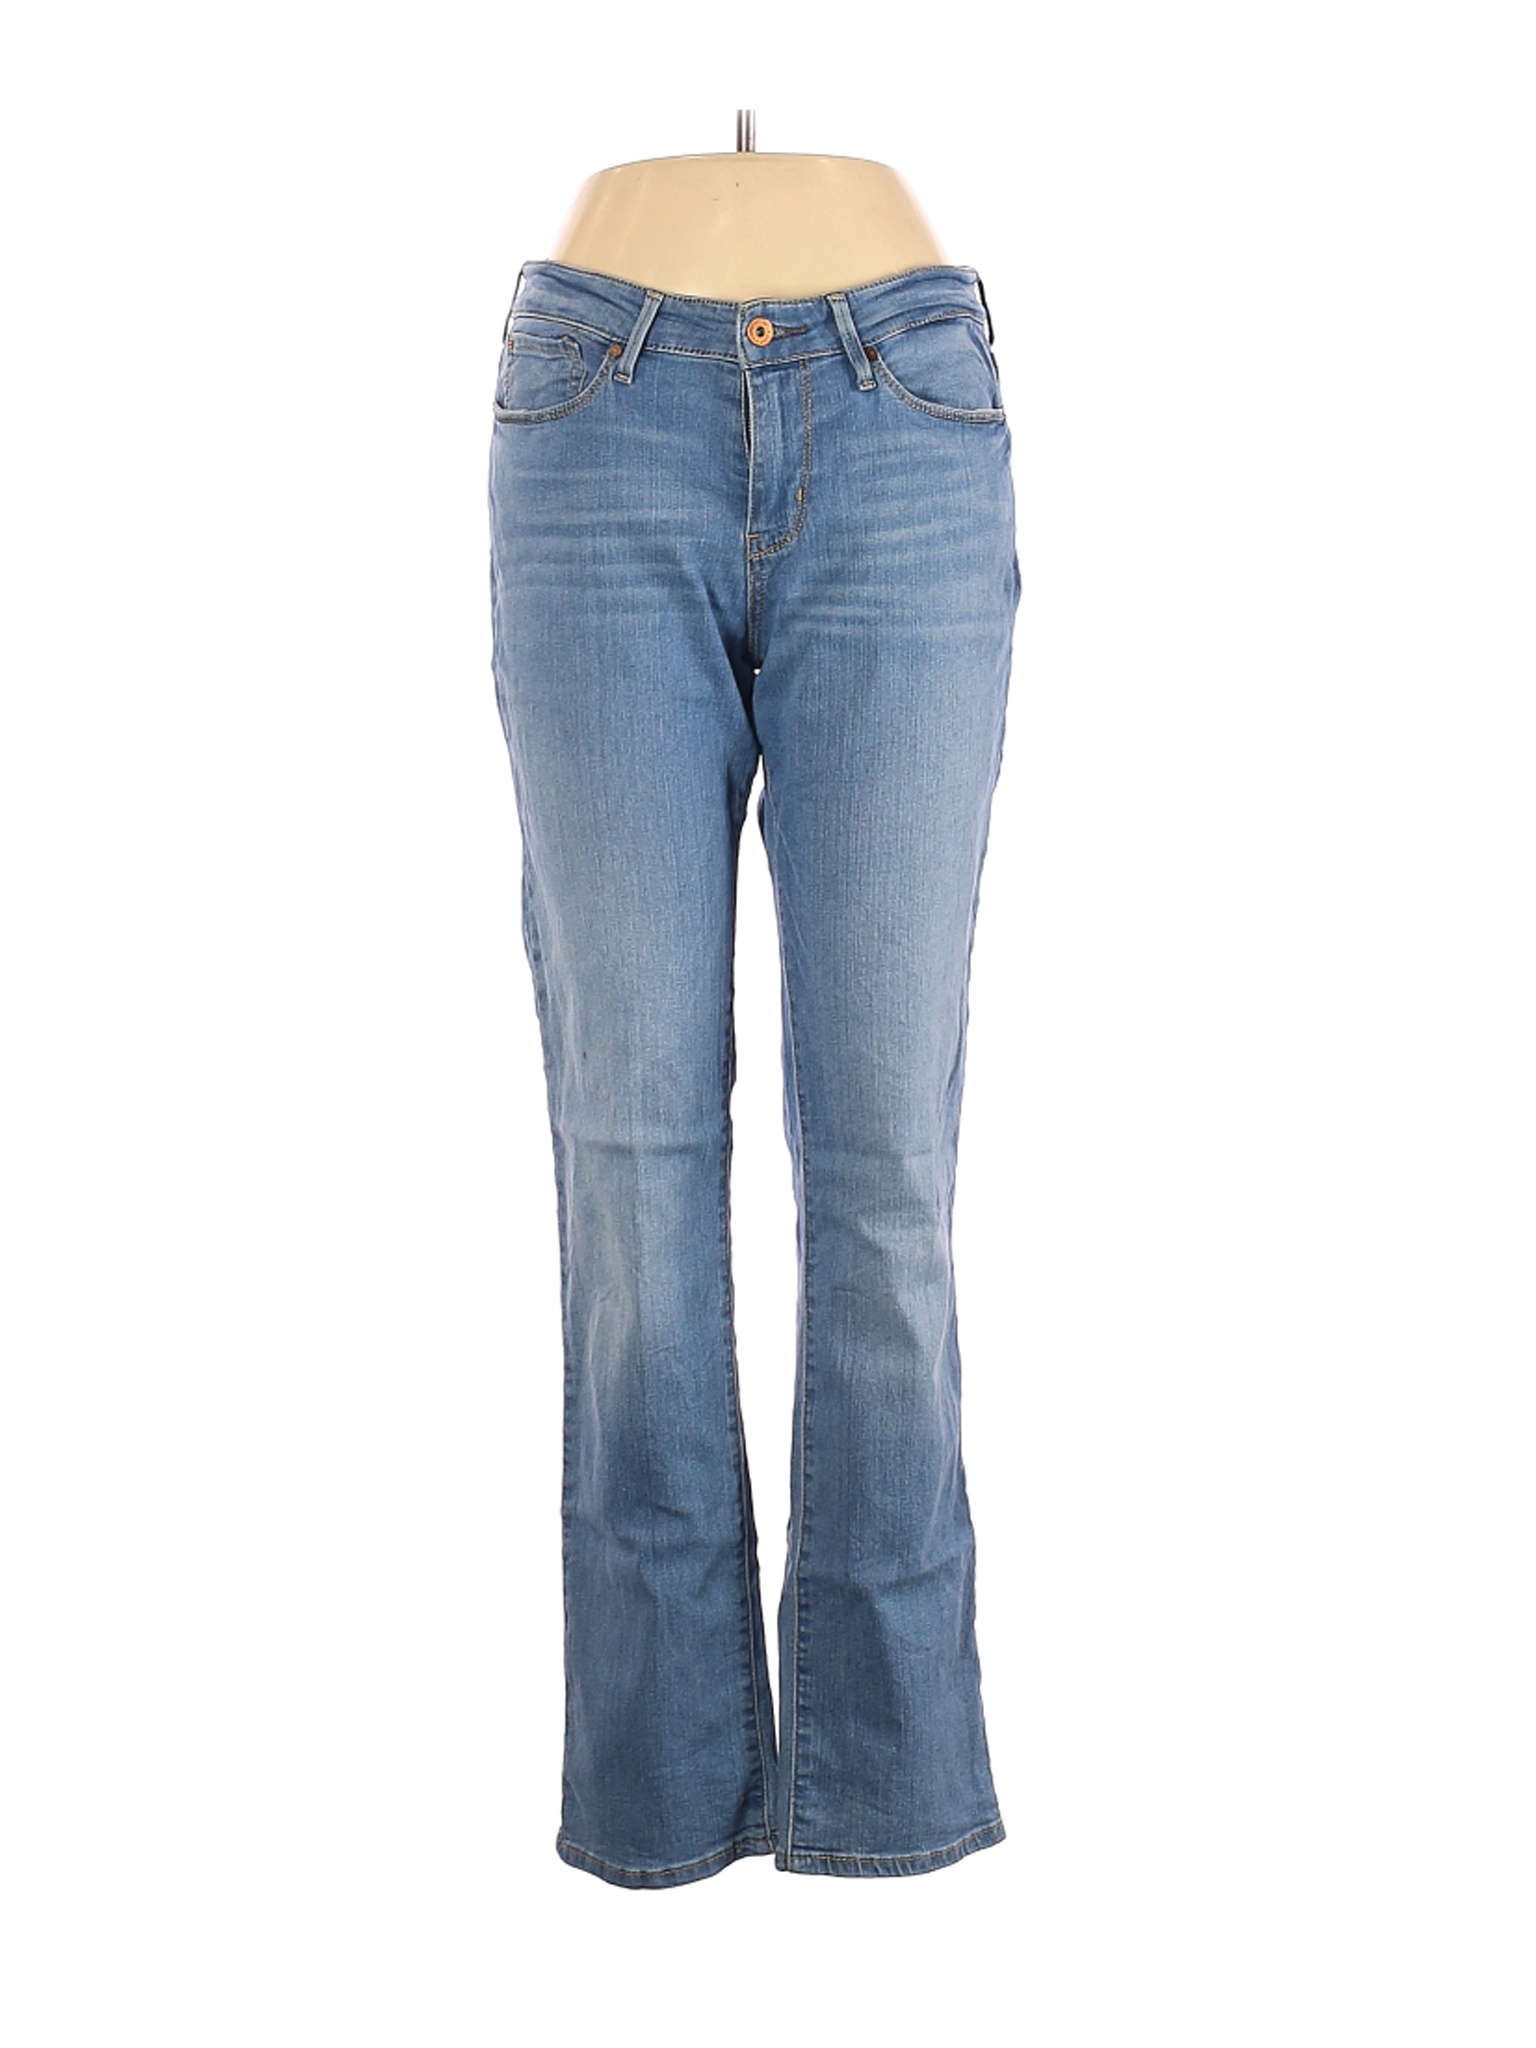 Levi Strauss Signature Women Blue Jeans 30W | eBay